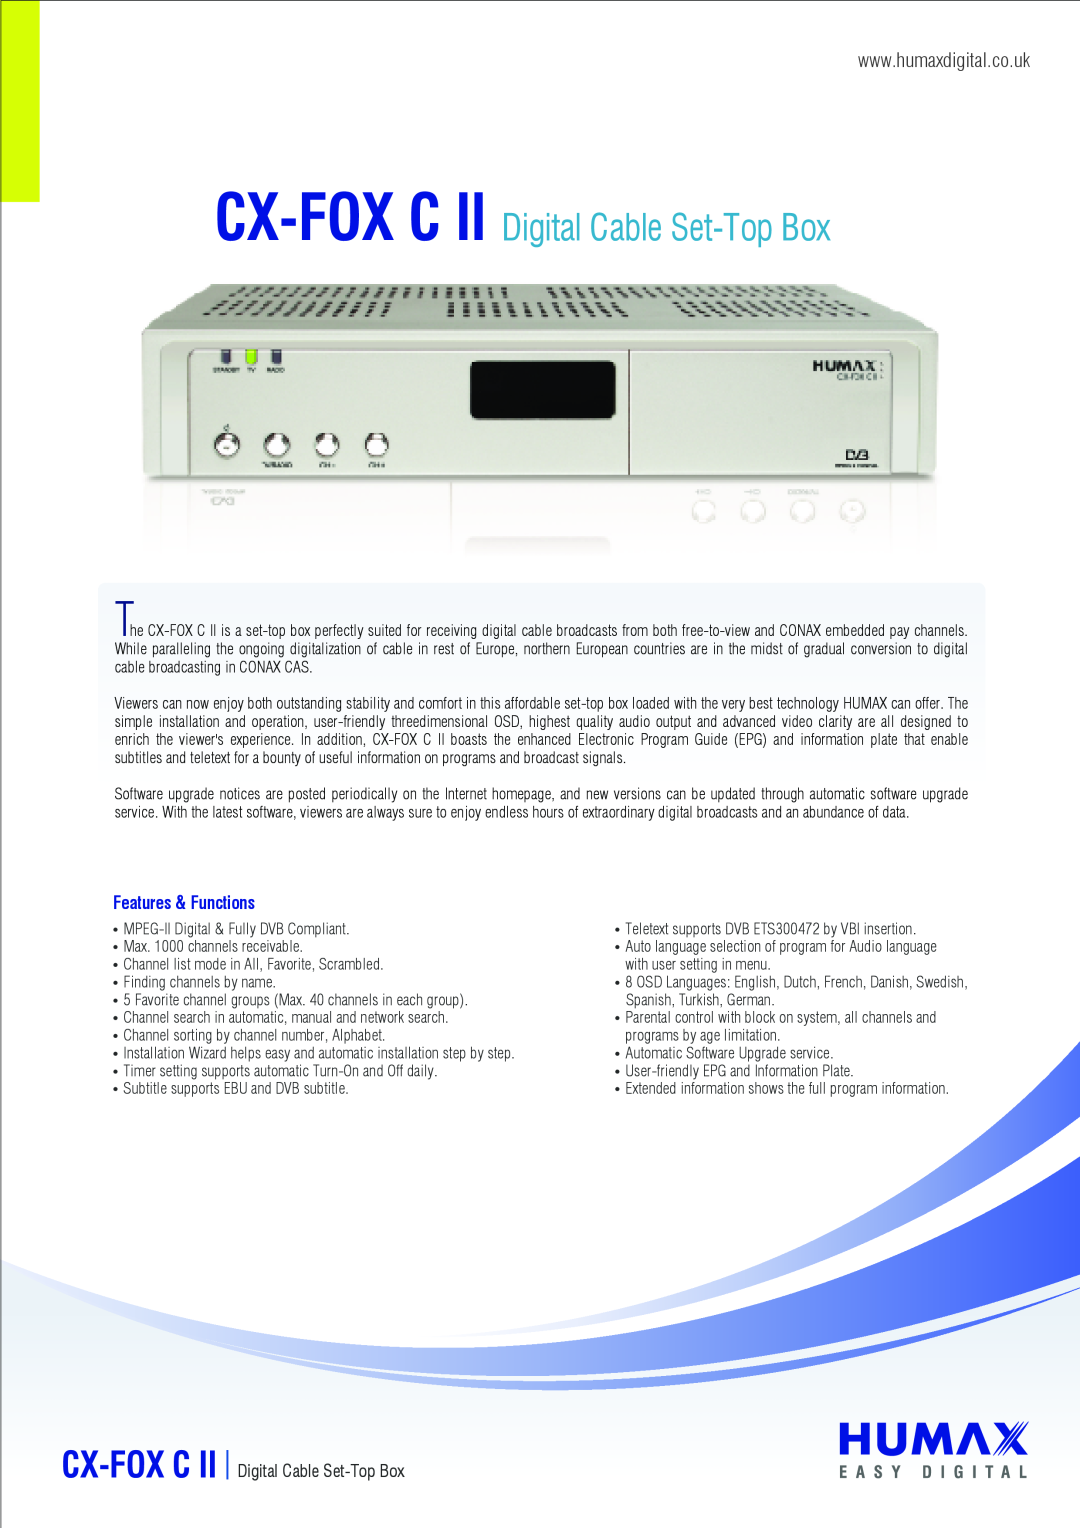 Humax user manual CX-FOX C II Digital Cable Set-Top Box, Cx-Fox C, Features & Functions 